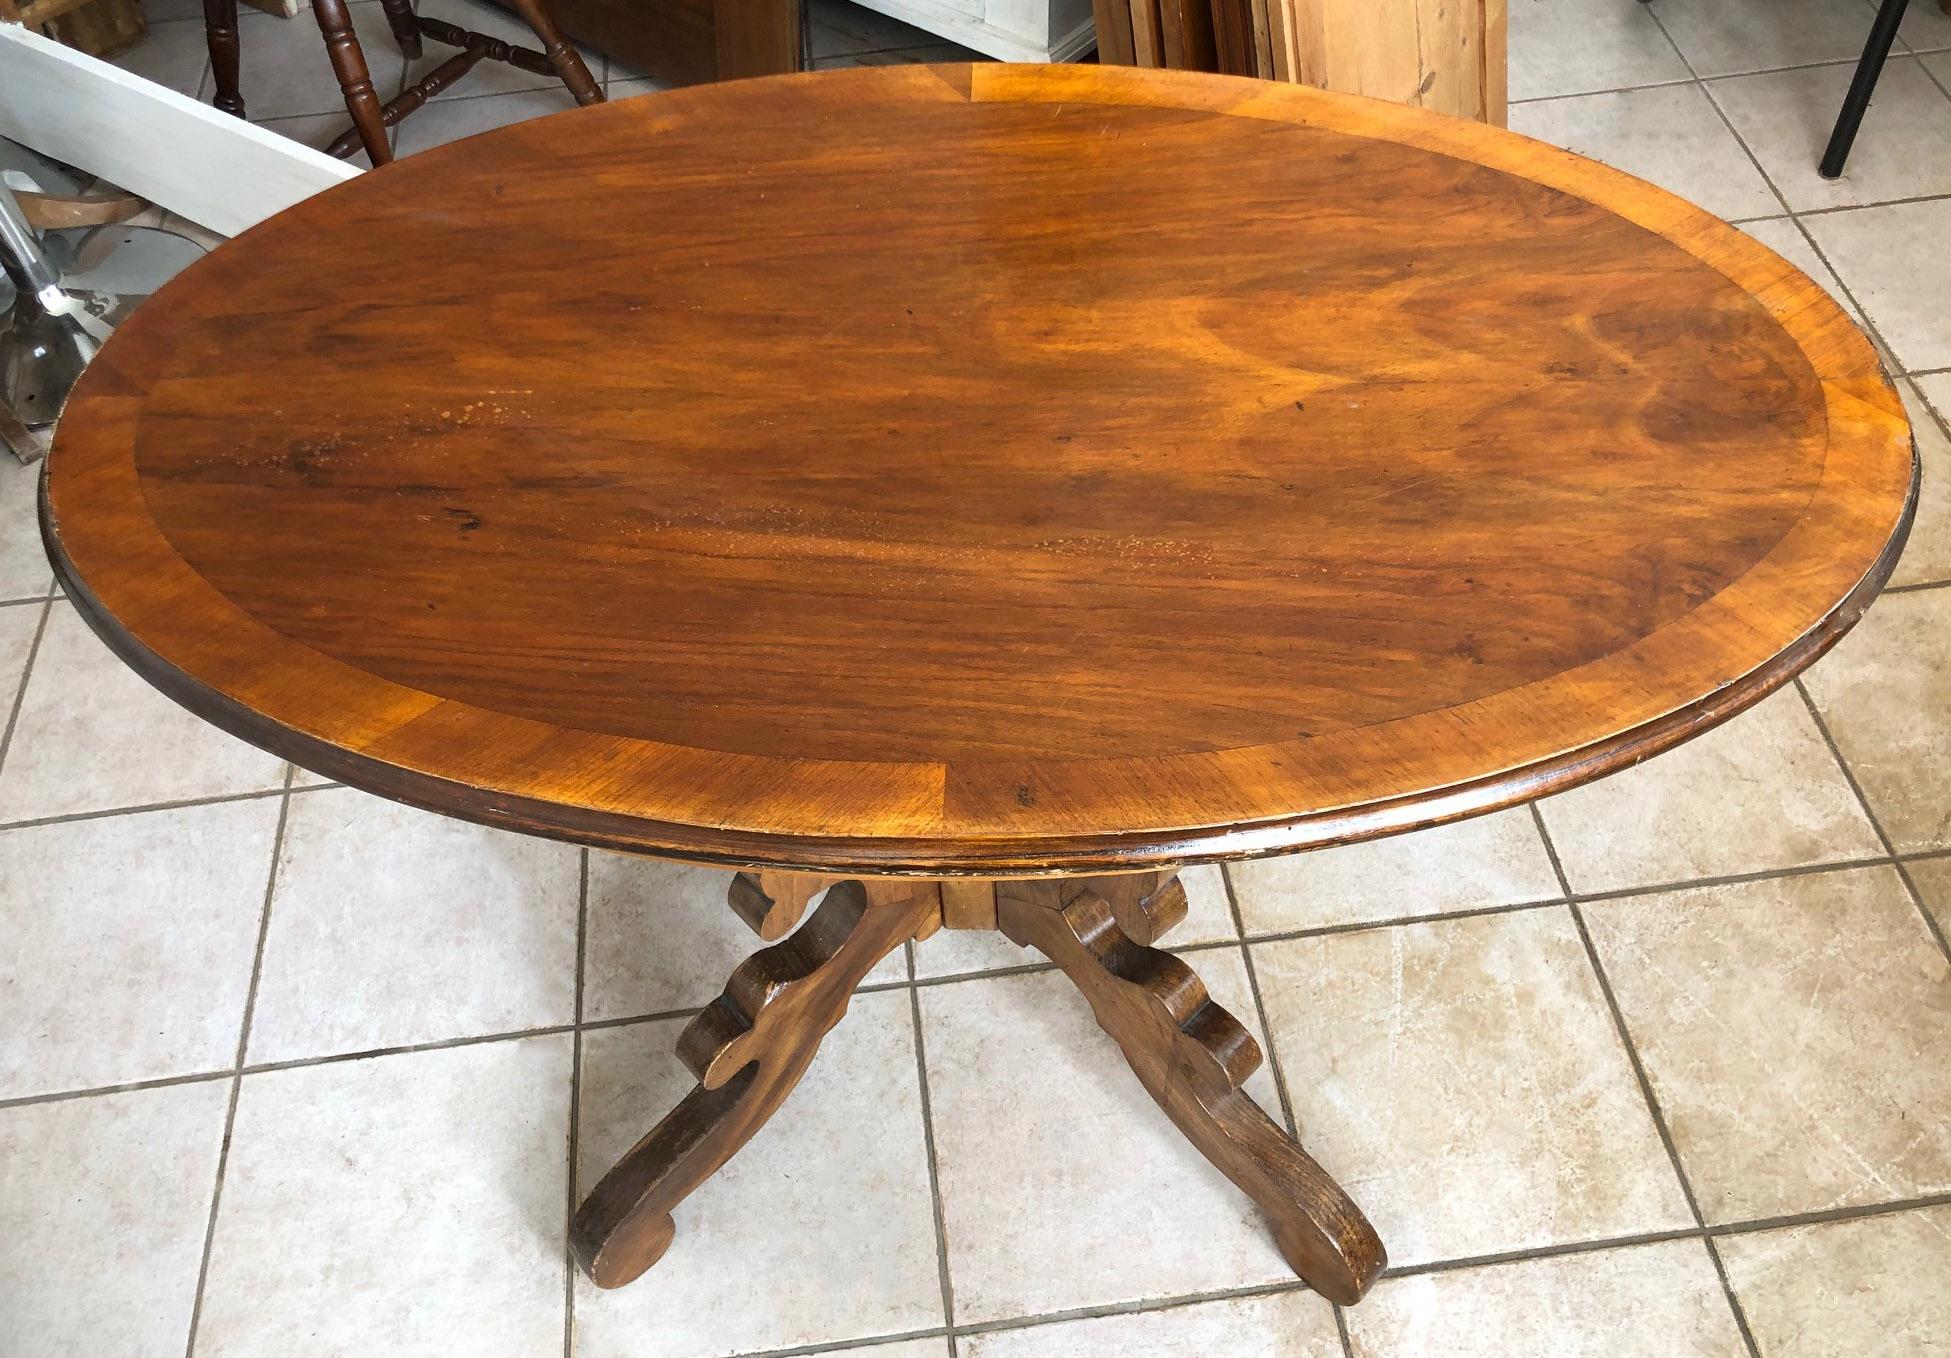 Rustic Oval Table in Walnut, from 1900, Original Tuscan Veneered Top, Solid Wood Legs